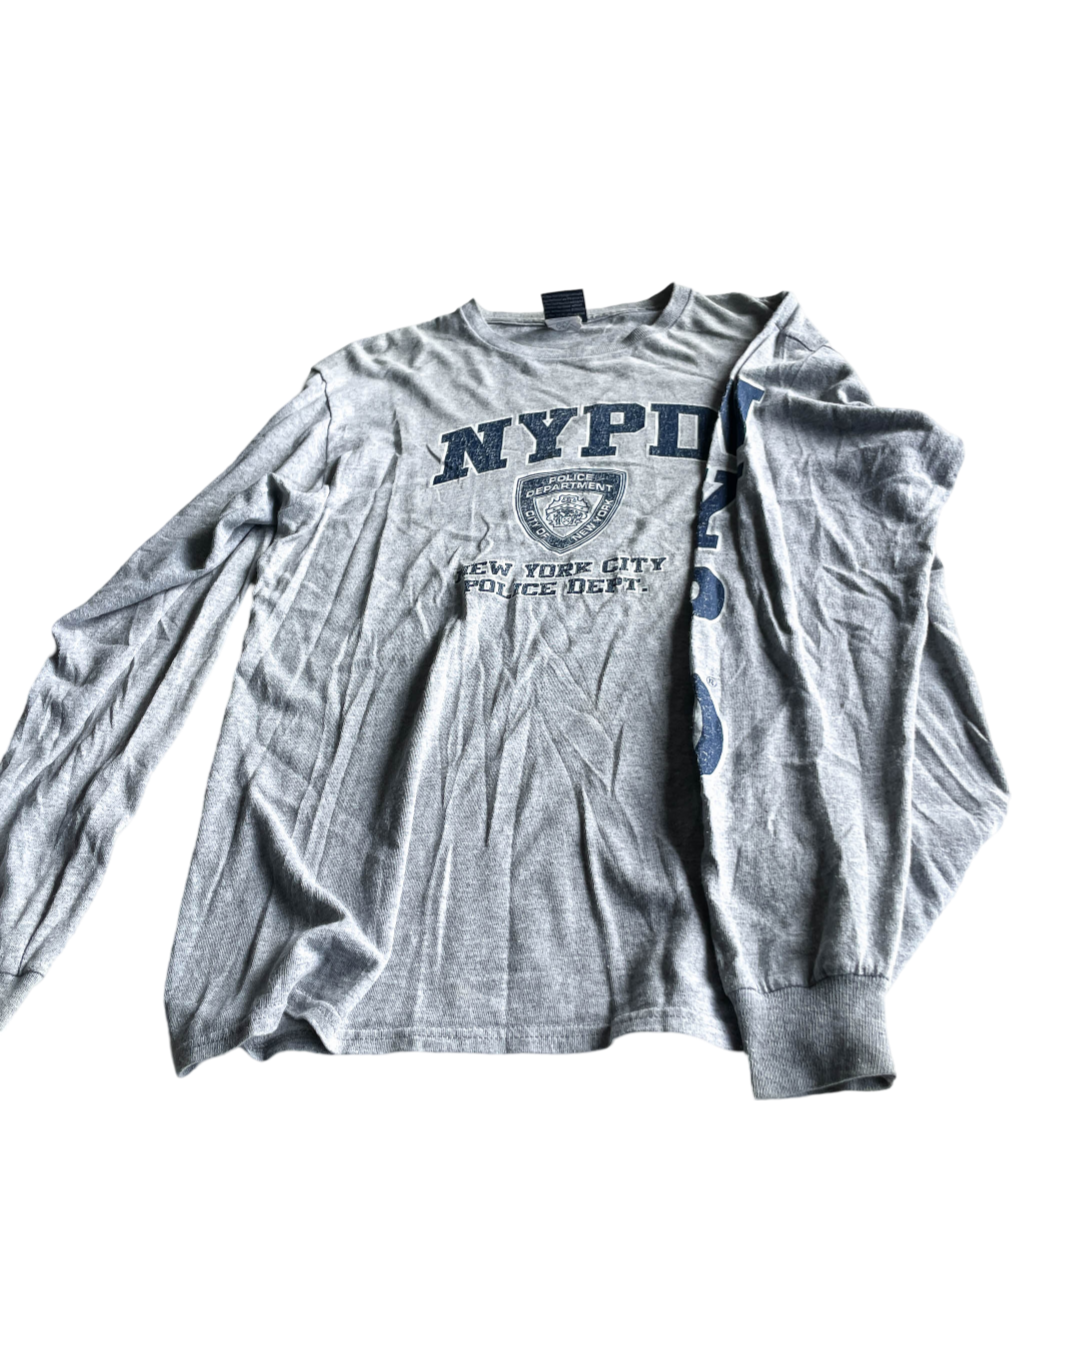 Vintage Original Long Sleeve NYPD Shirt New York City police | NYPD Apparel L 28 W 19 in Medium |SKU 5078